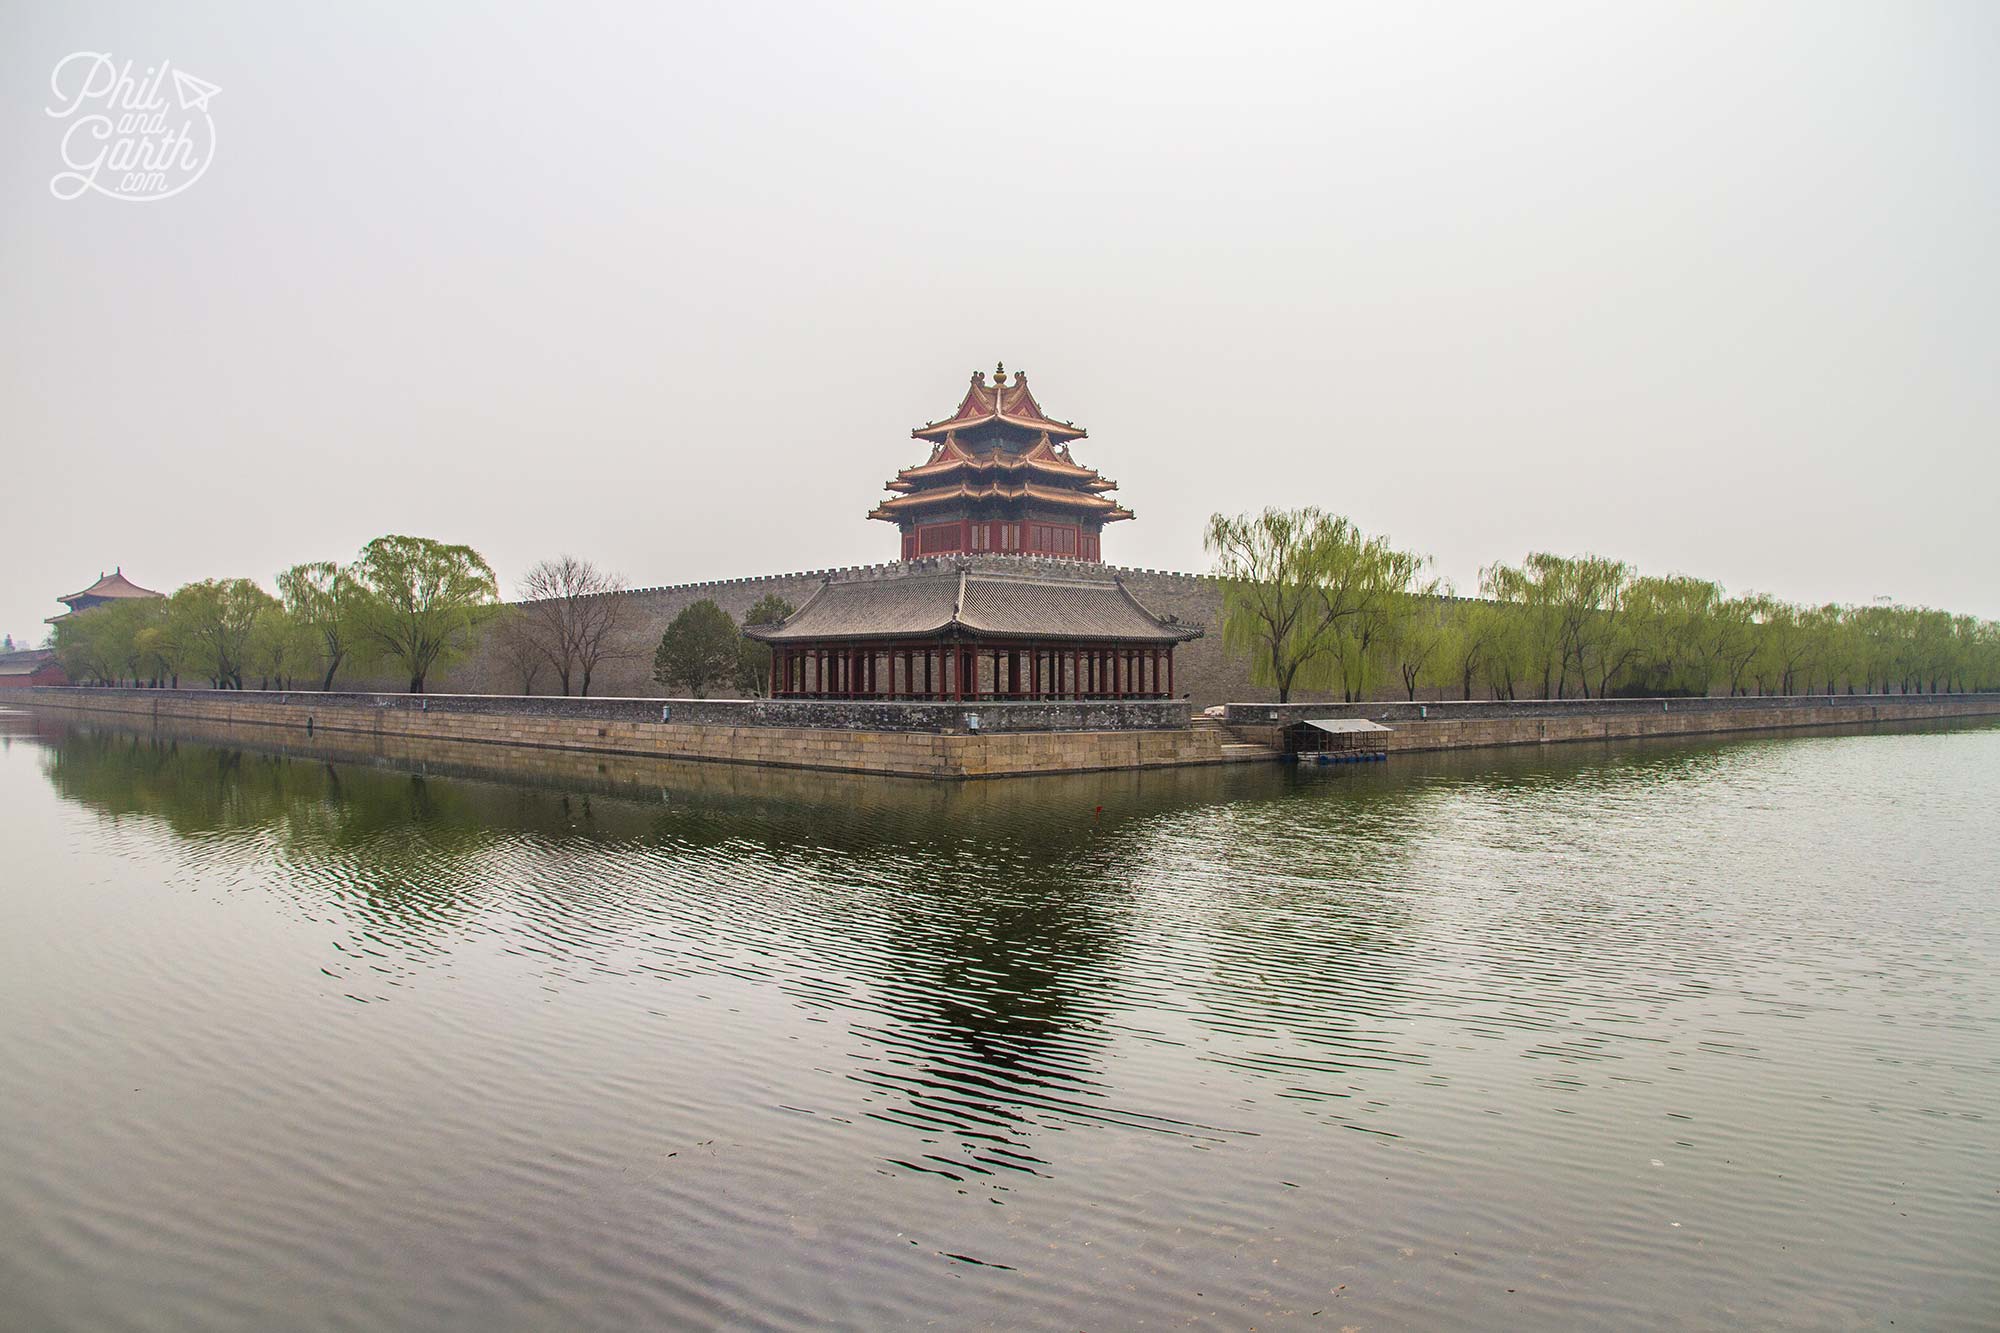 The exterior walls of The Forbidden City